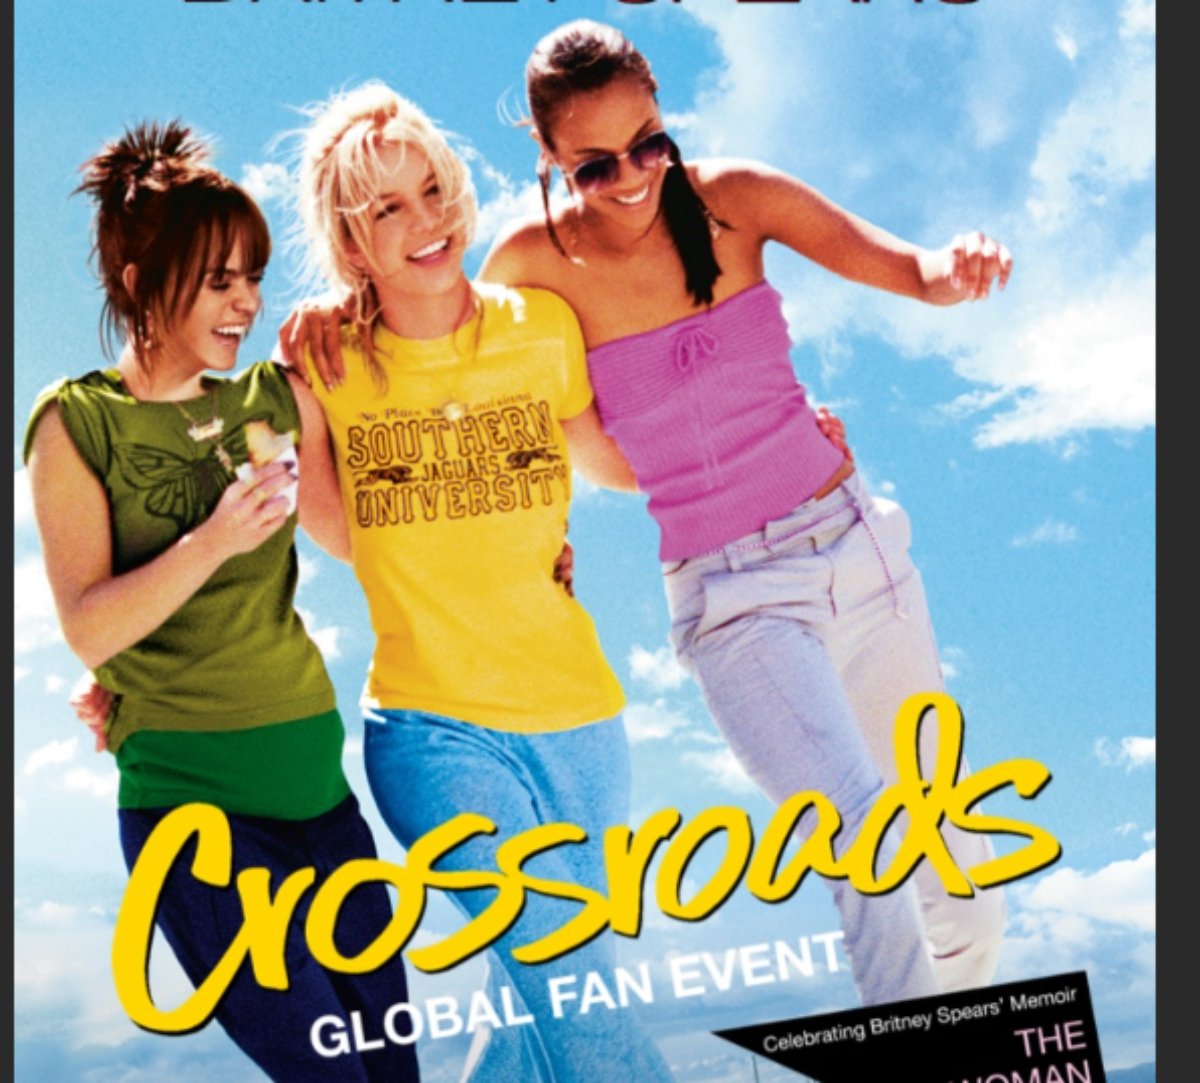 'Crossroads' Britney Spears movie poster